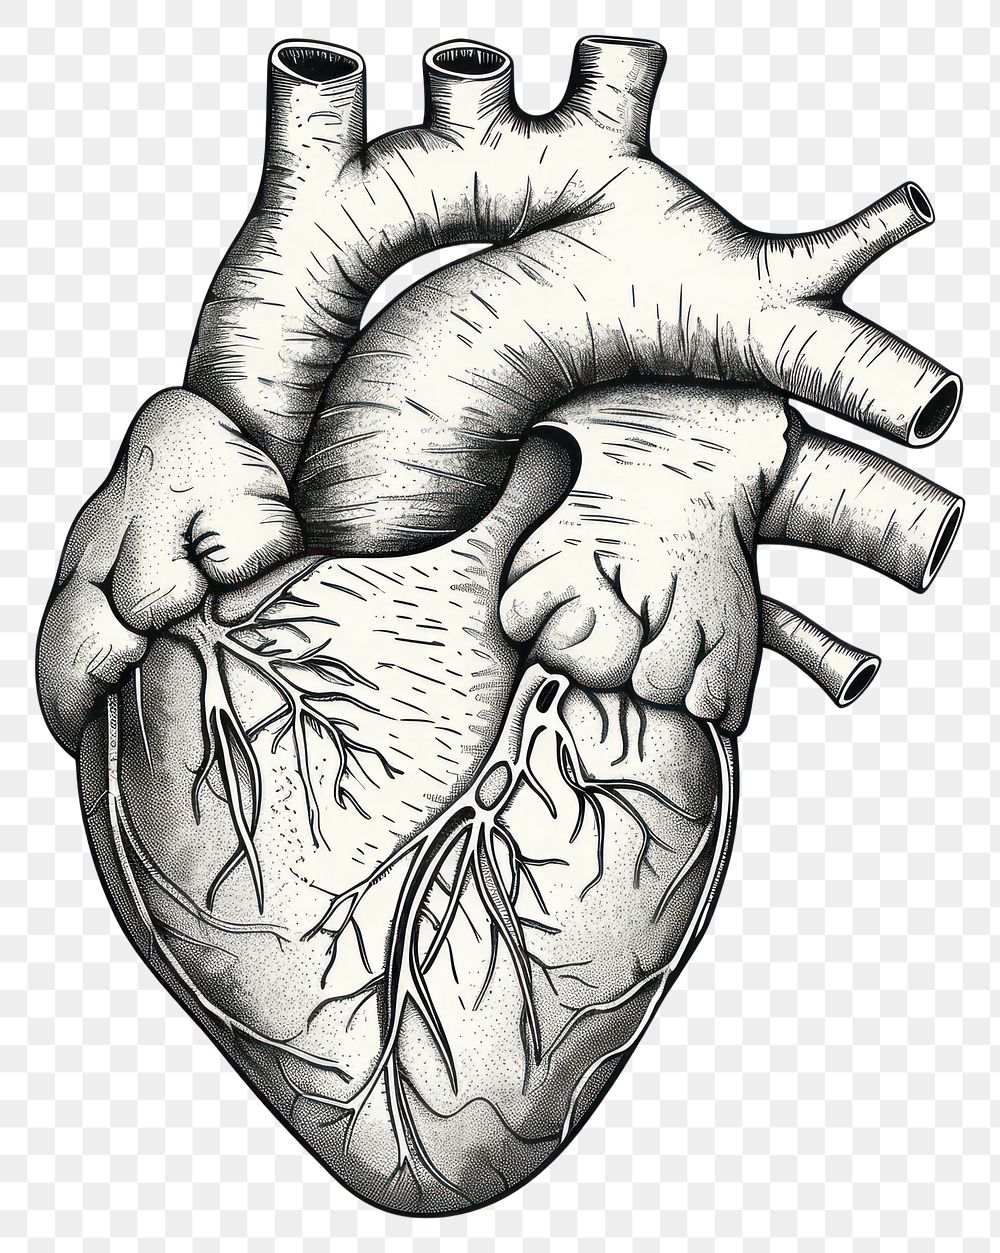 Detailed anatomical heart illustration